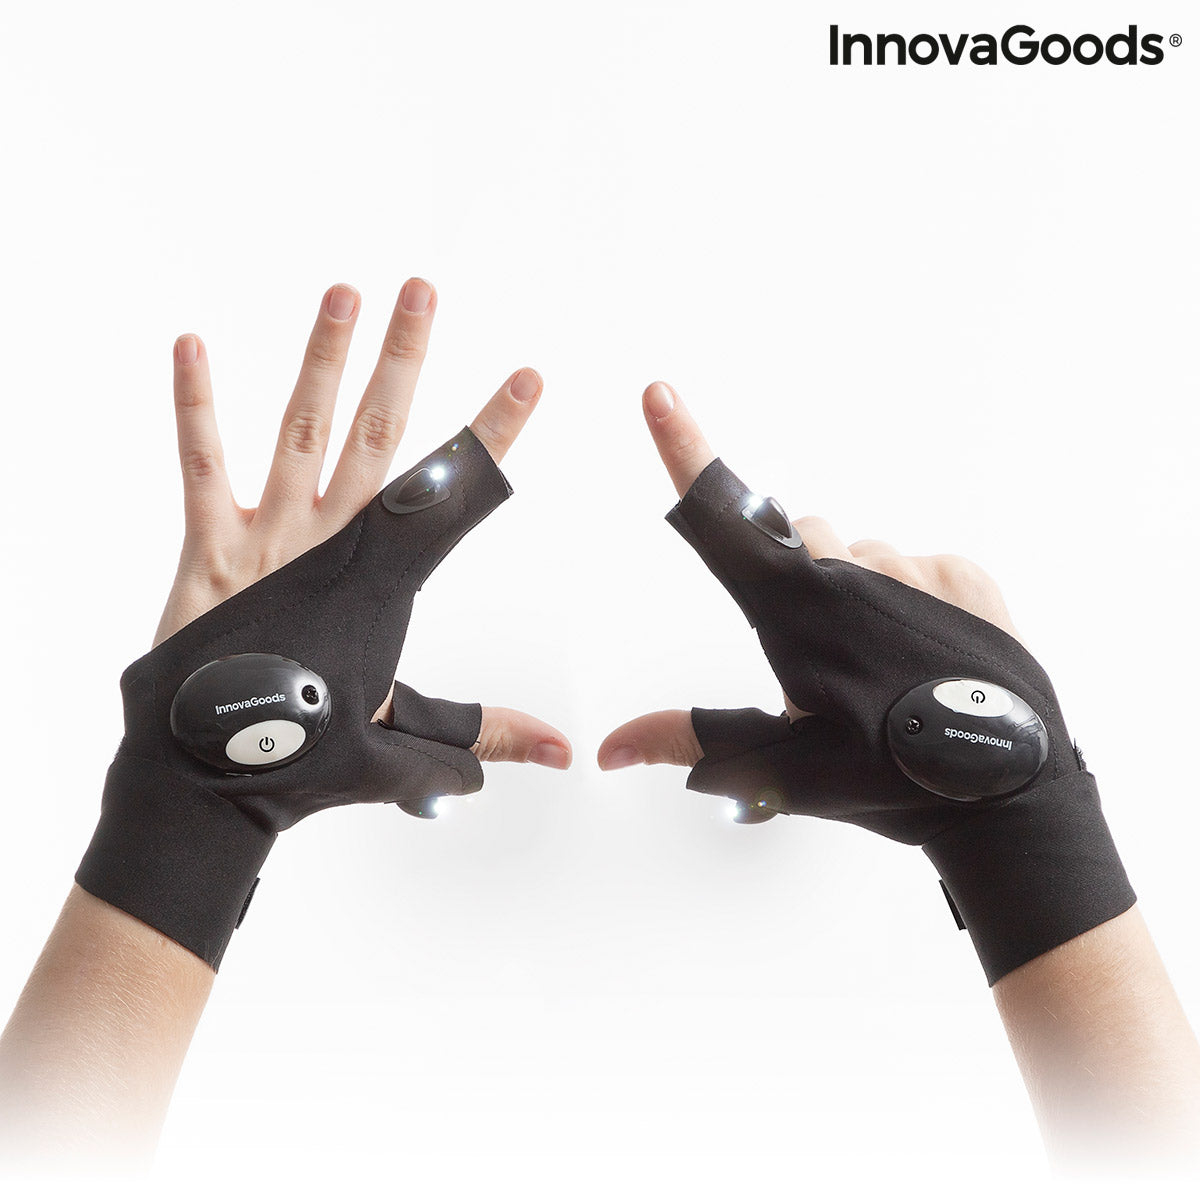 LED Gloves - guanti luminosi con luci a led - 6 effetti diversi!